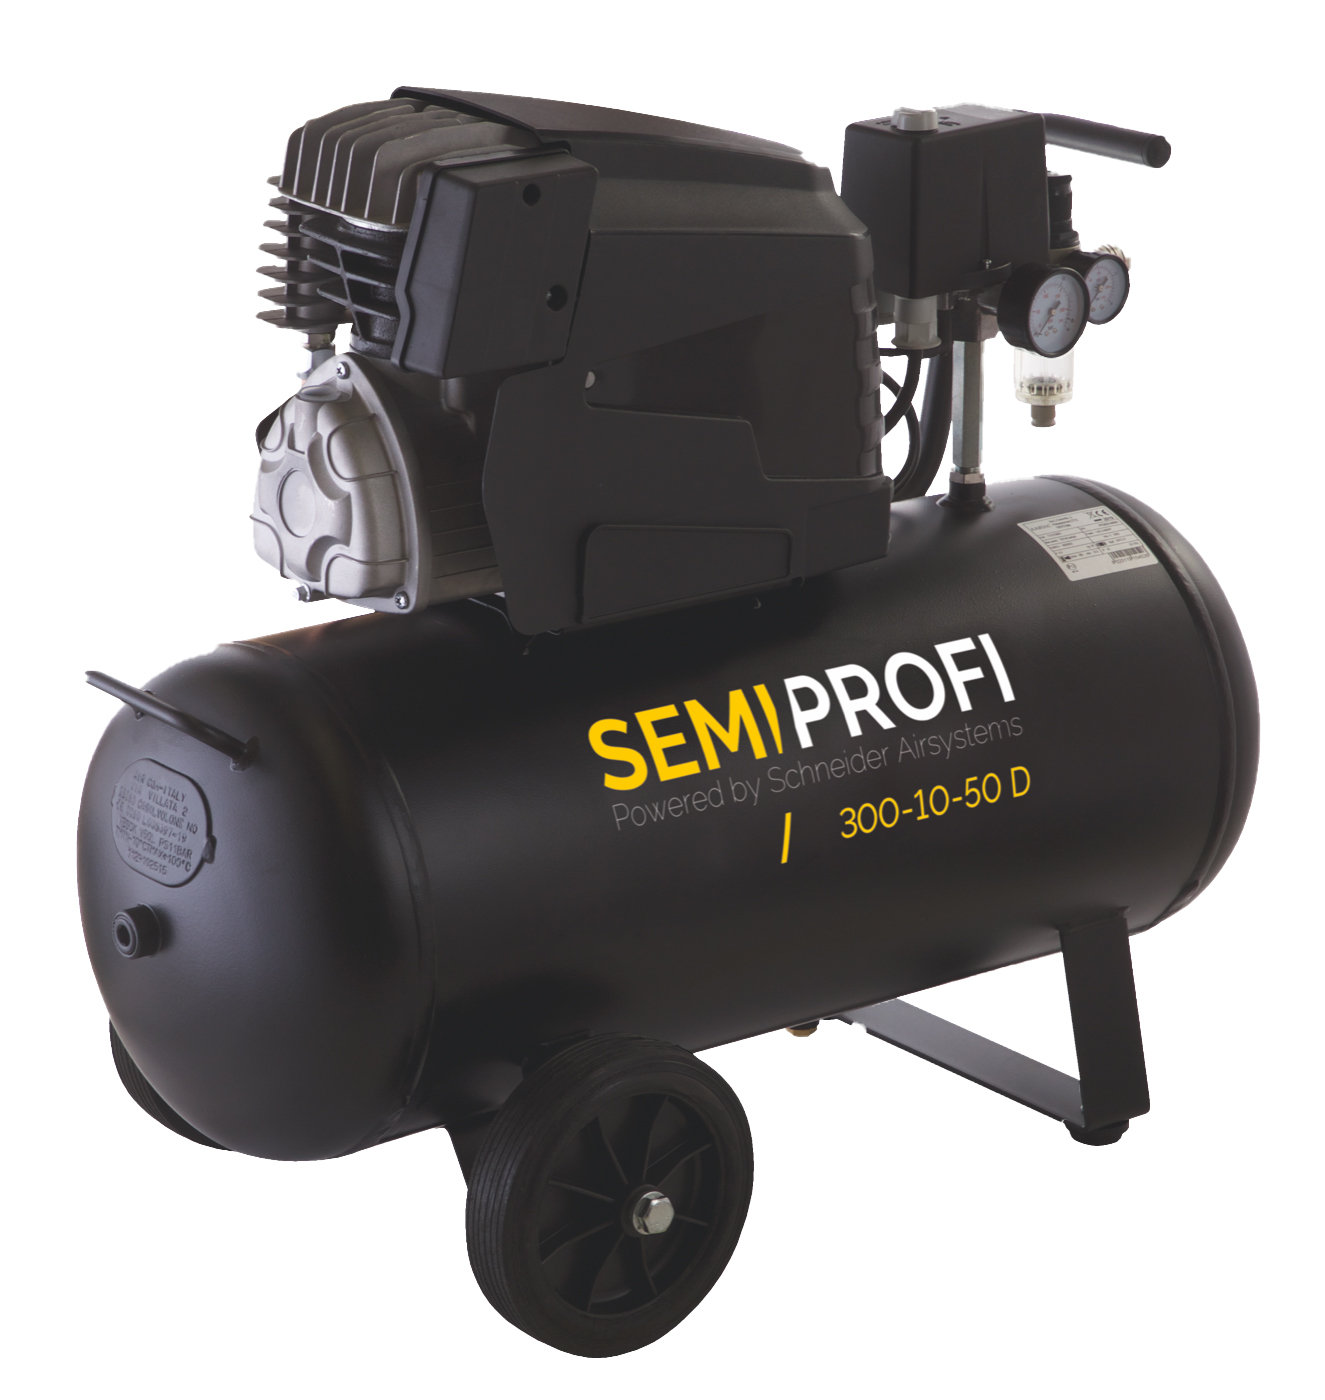 Schneider kompresor semi profi 300-10-50 D 1121310841